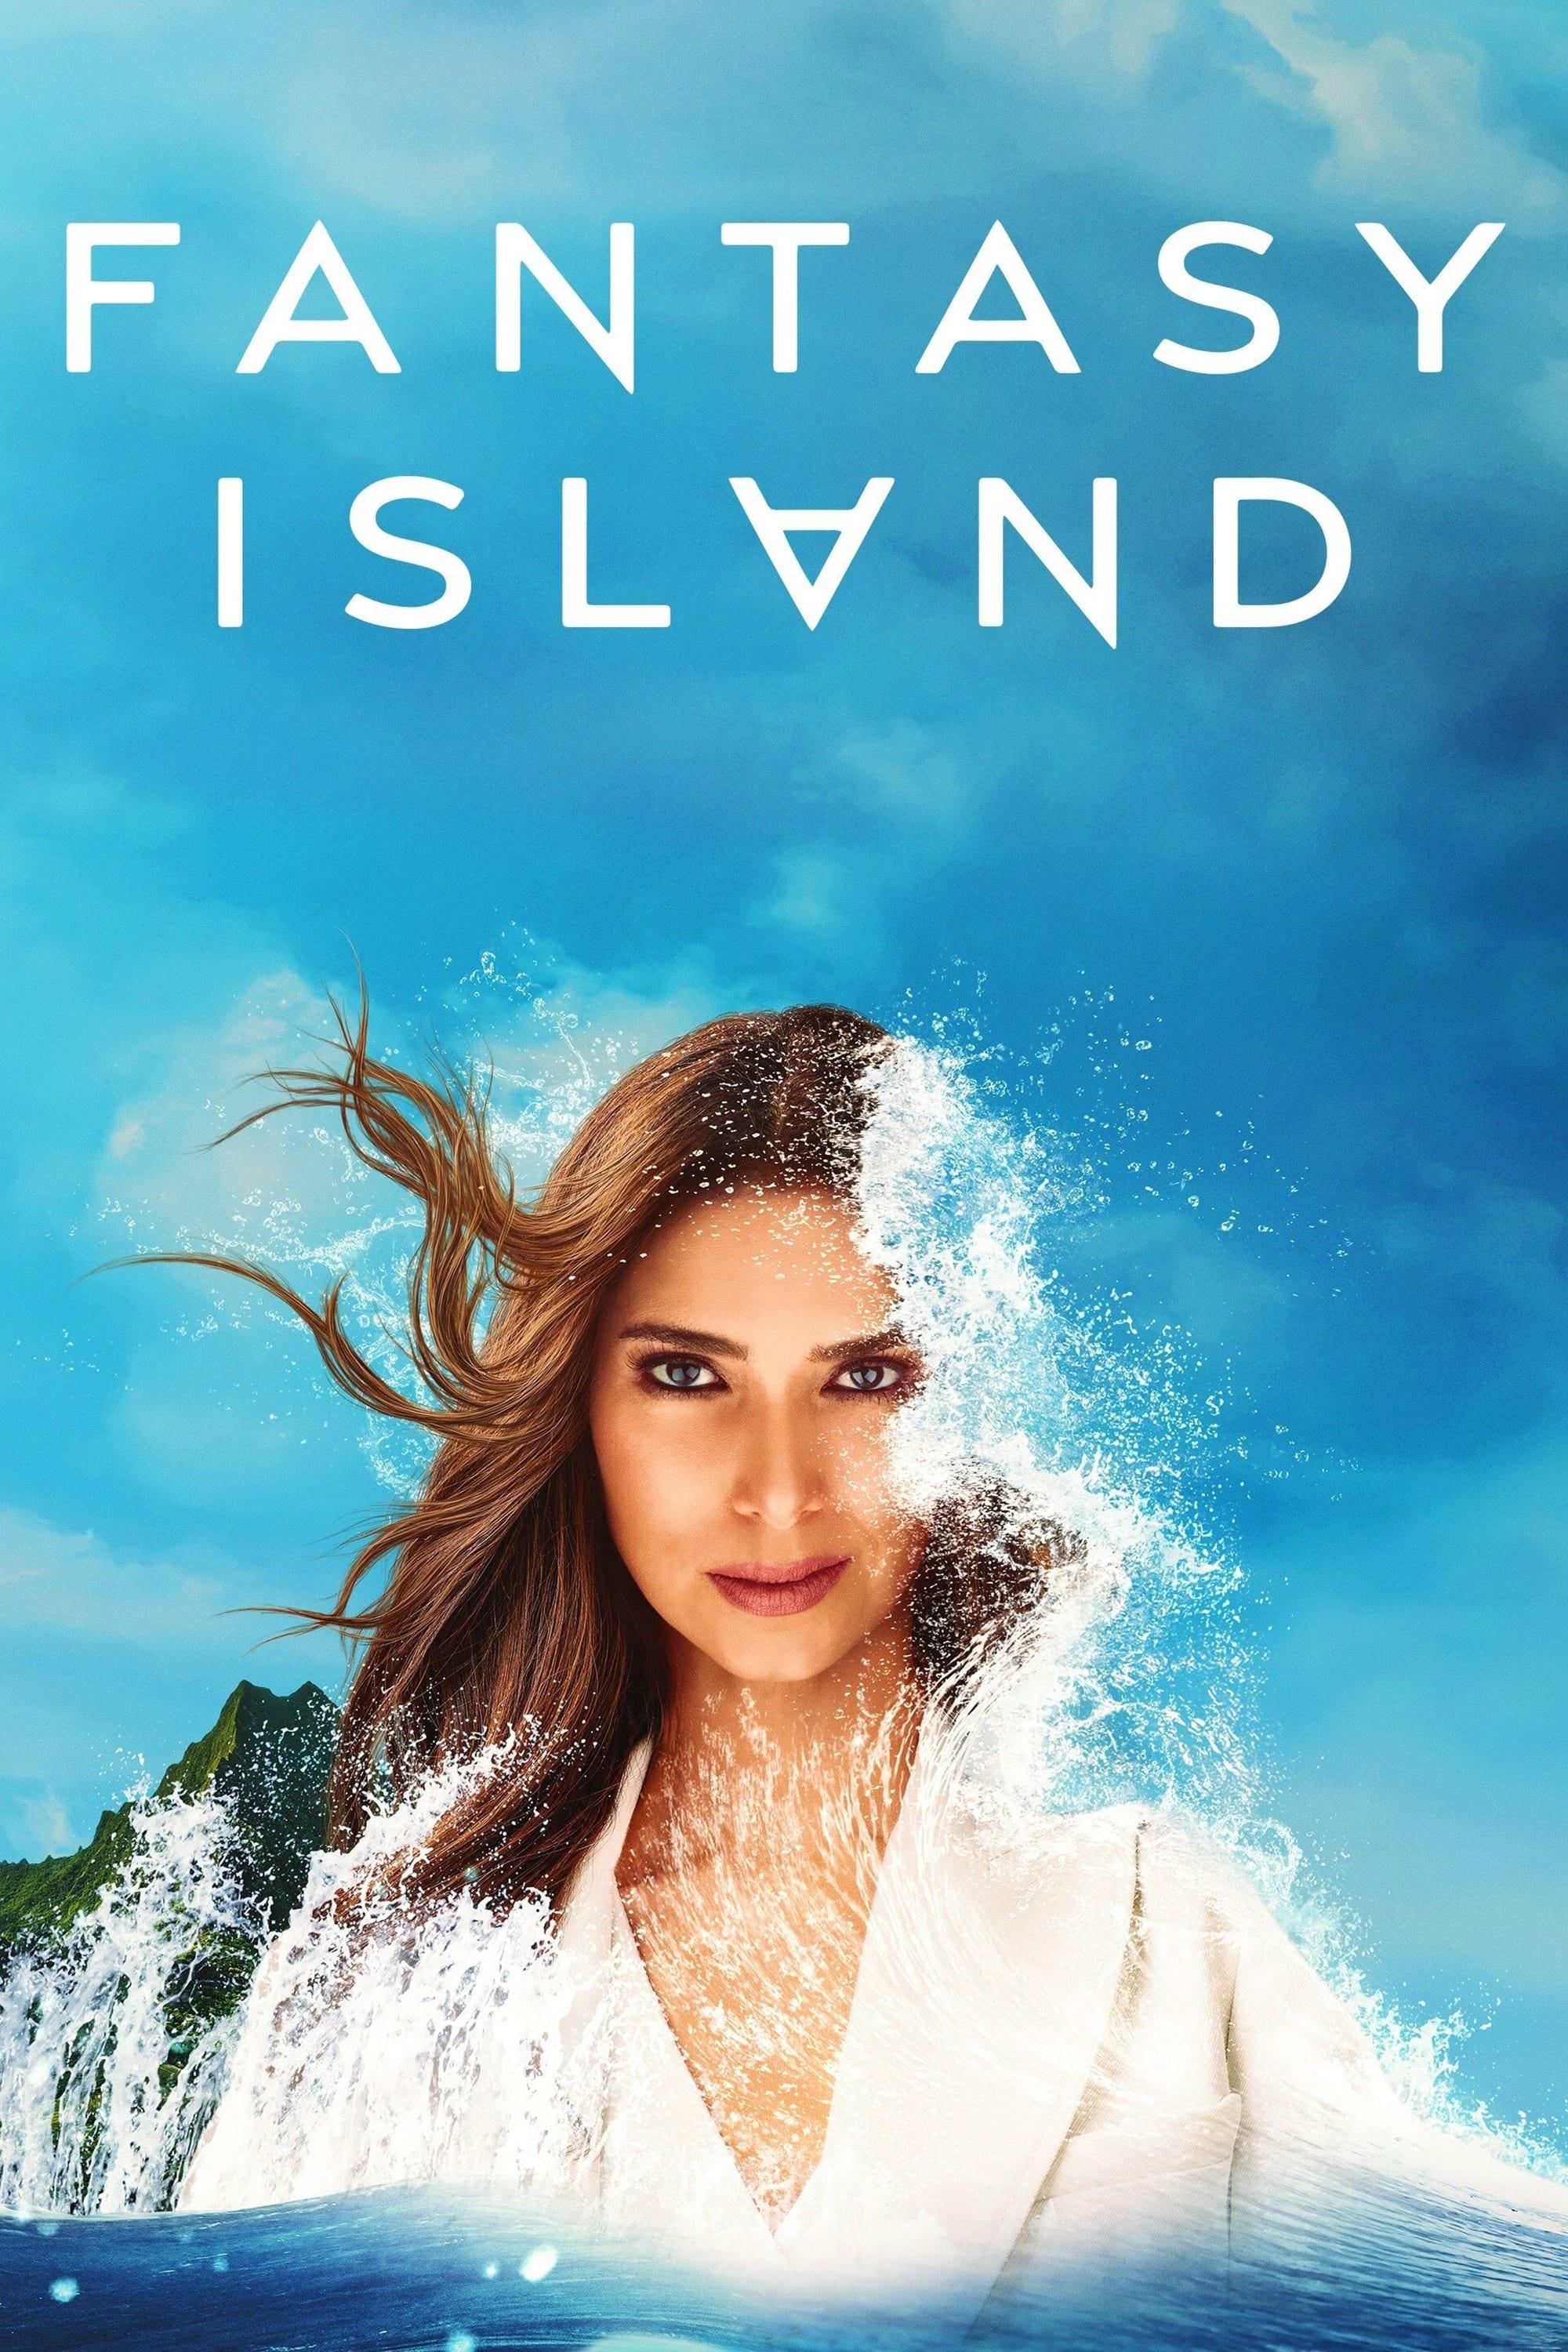 Fantasy Island poster